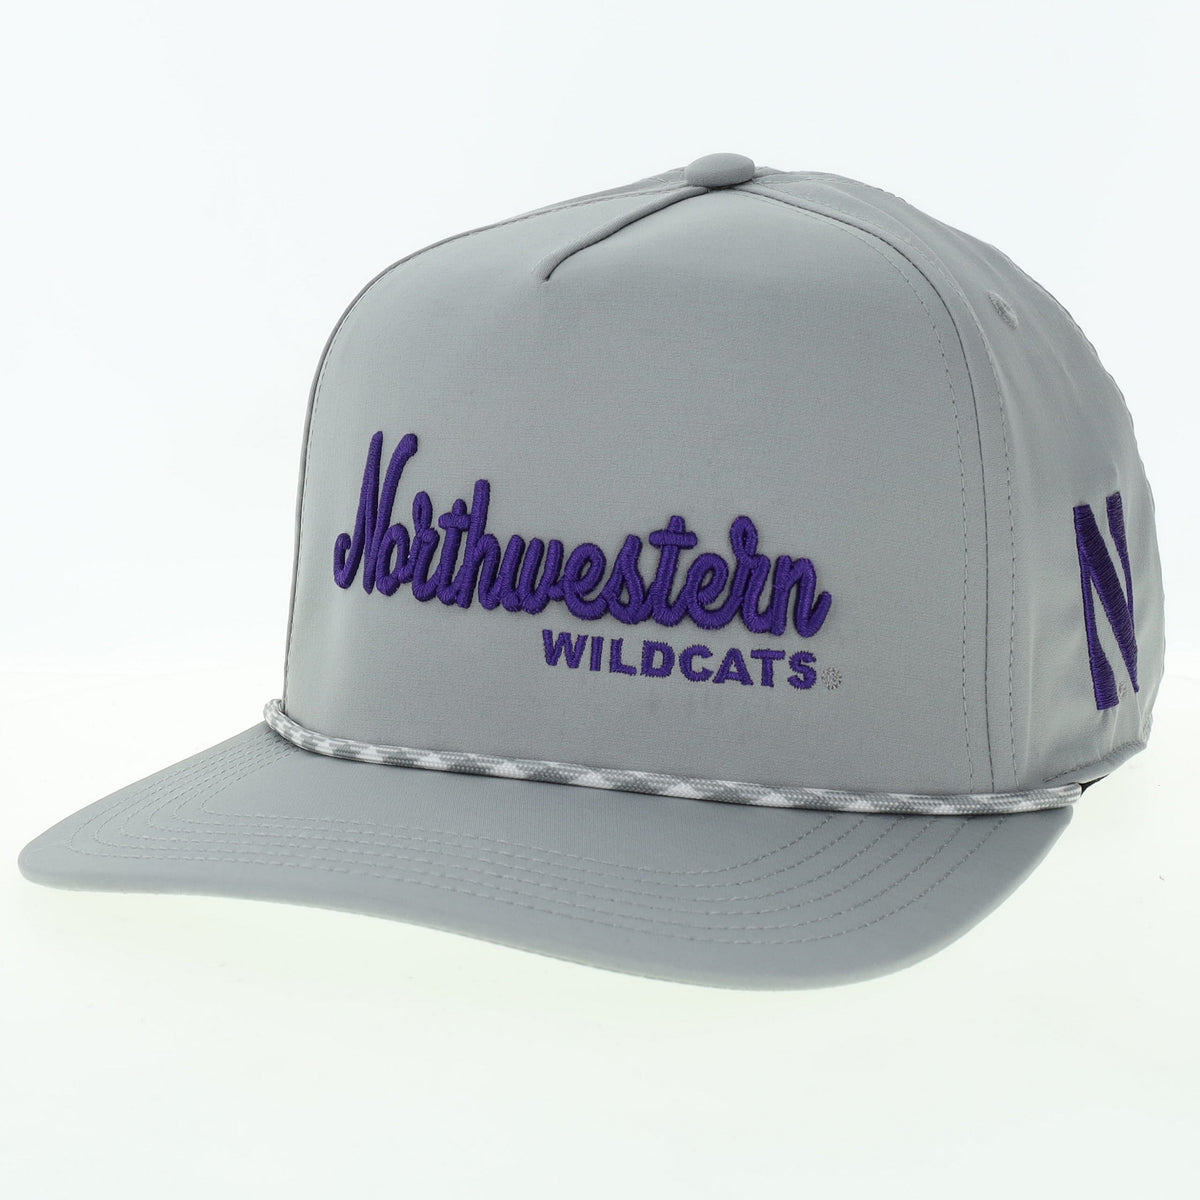 Northwestern Wildcats TW Unconstructed Adjustable Charcoal Grey